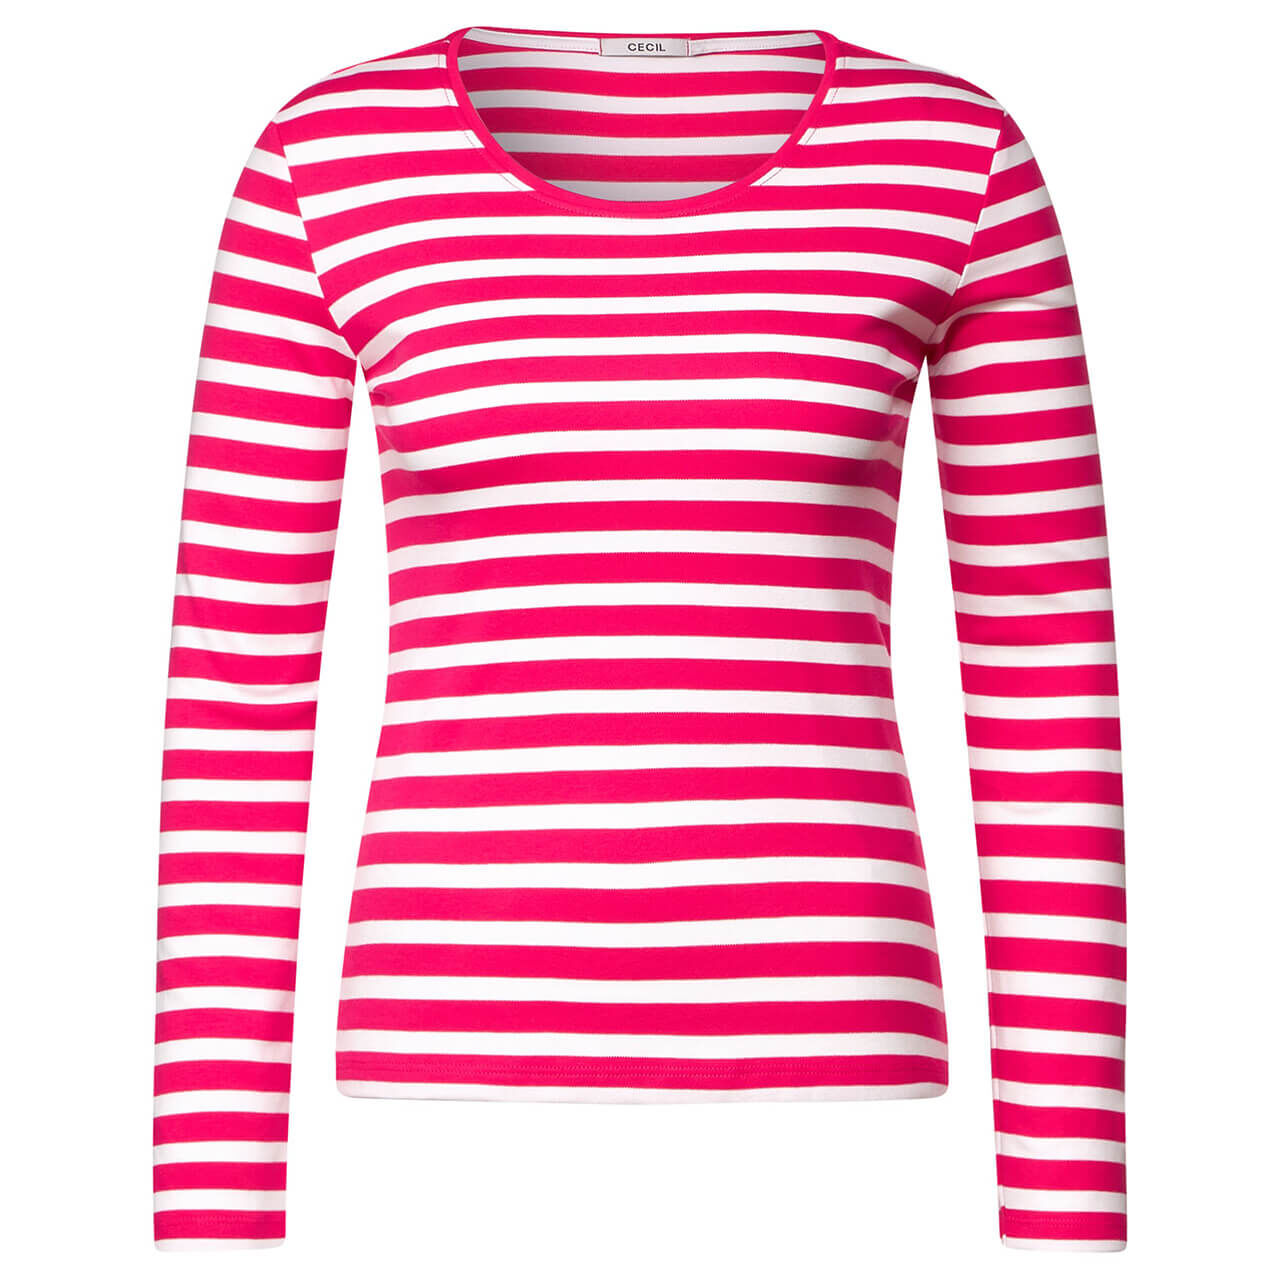 Cecil Pia Langarm Shirt fresh pink stripes